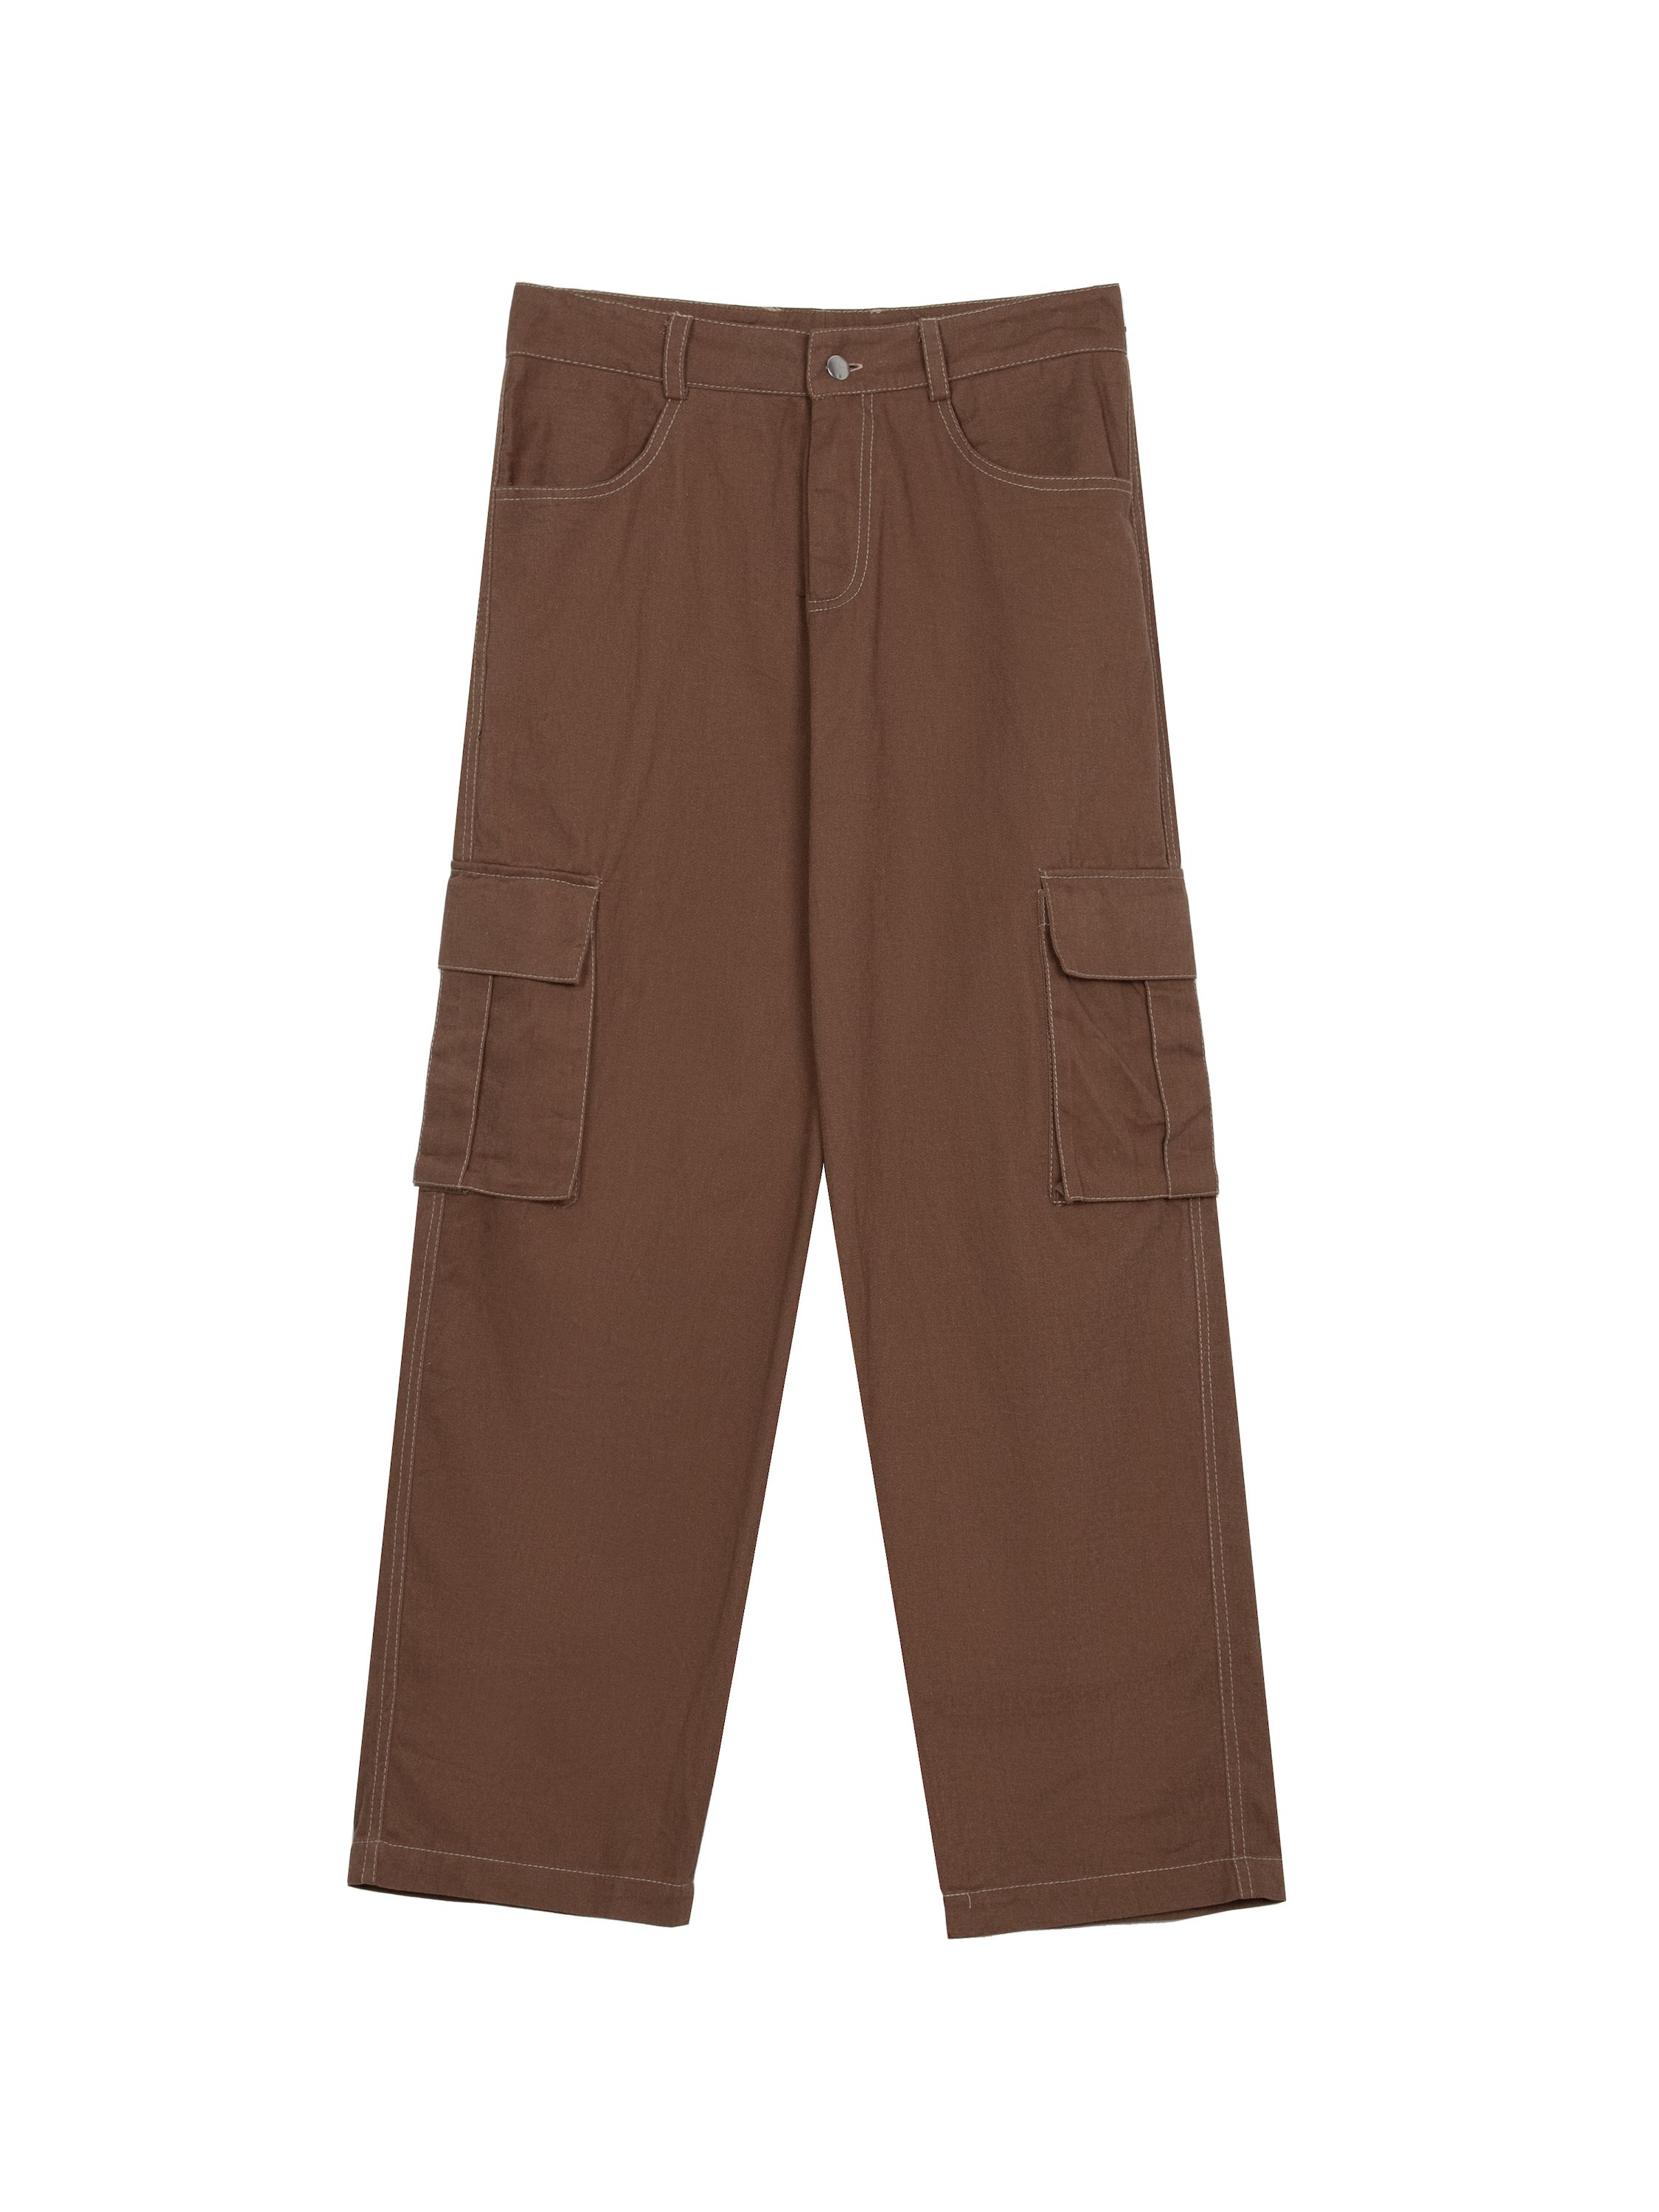 Quần Khaki Túi Hộp Màu Nâu - Khaki Cargo Pants